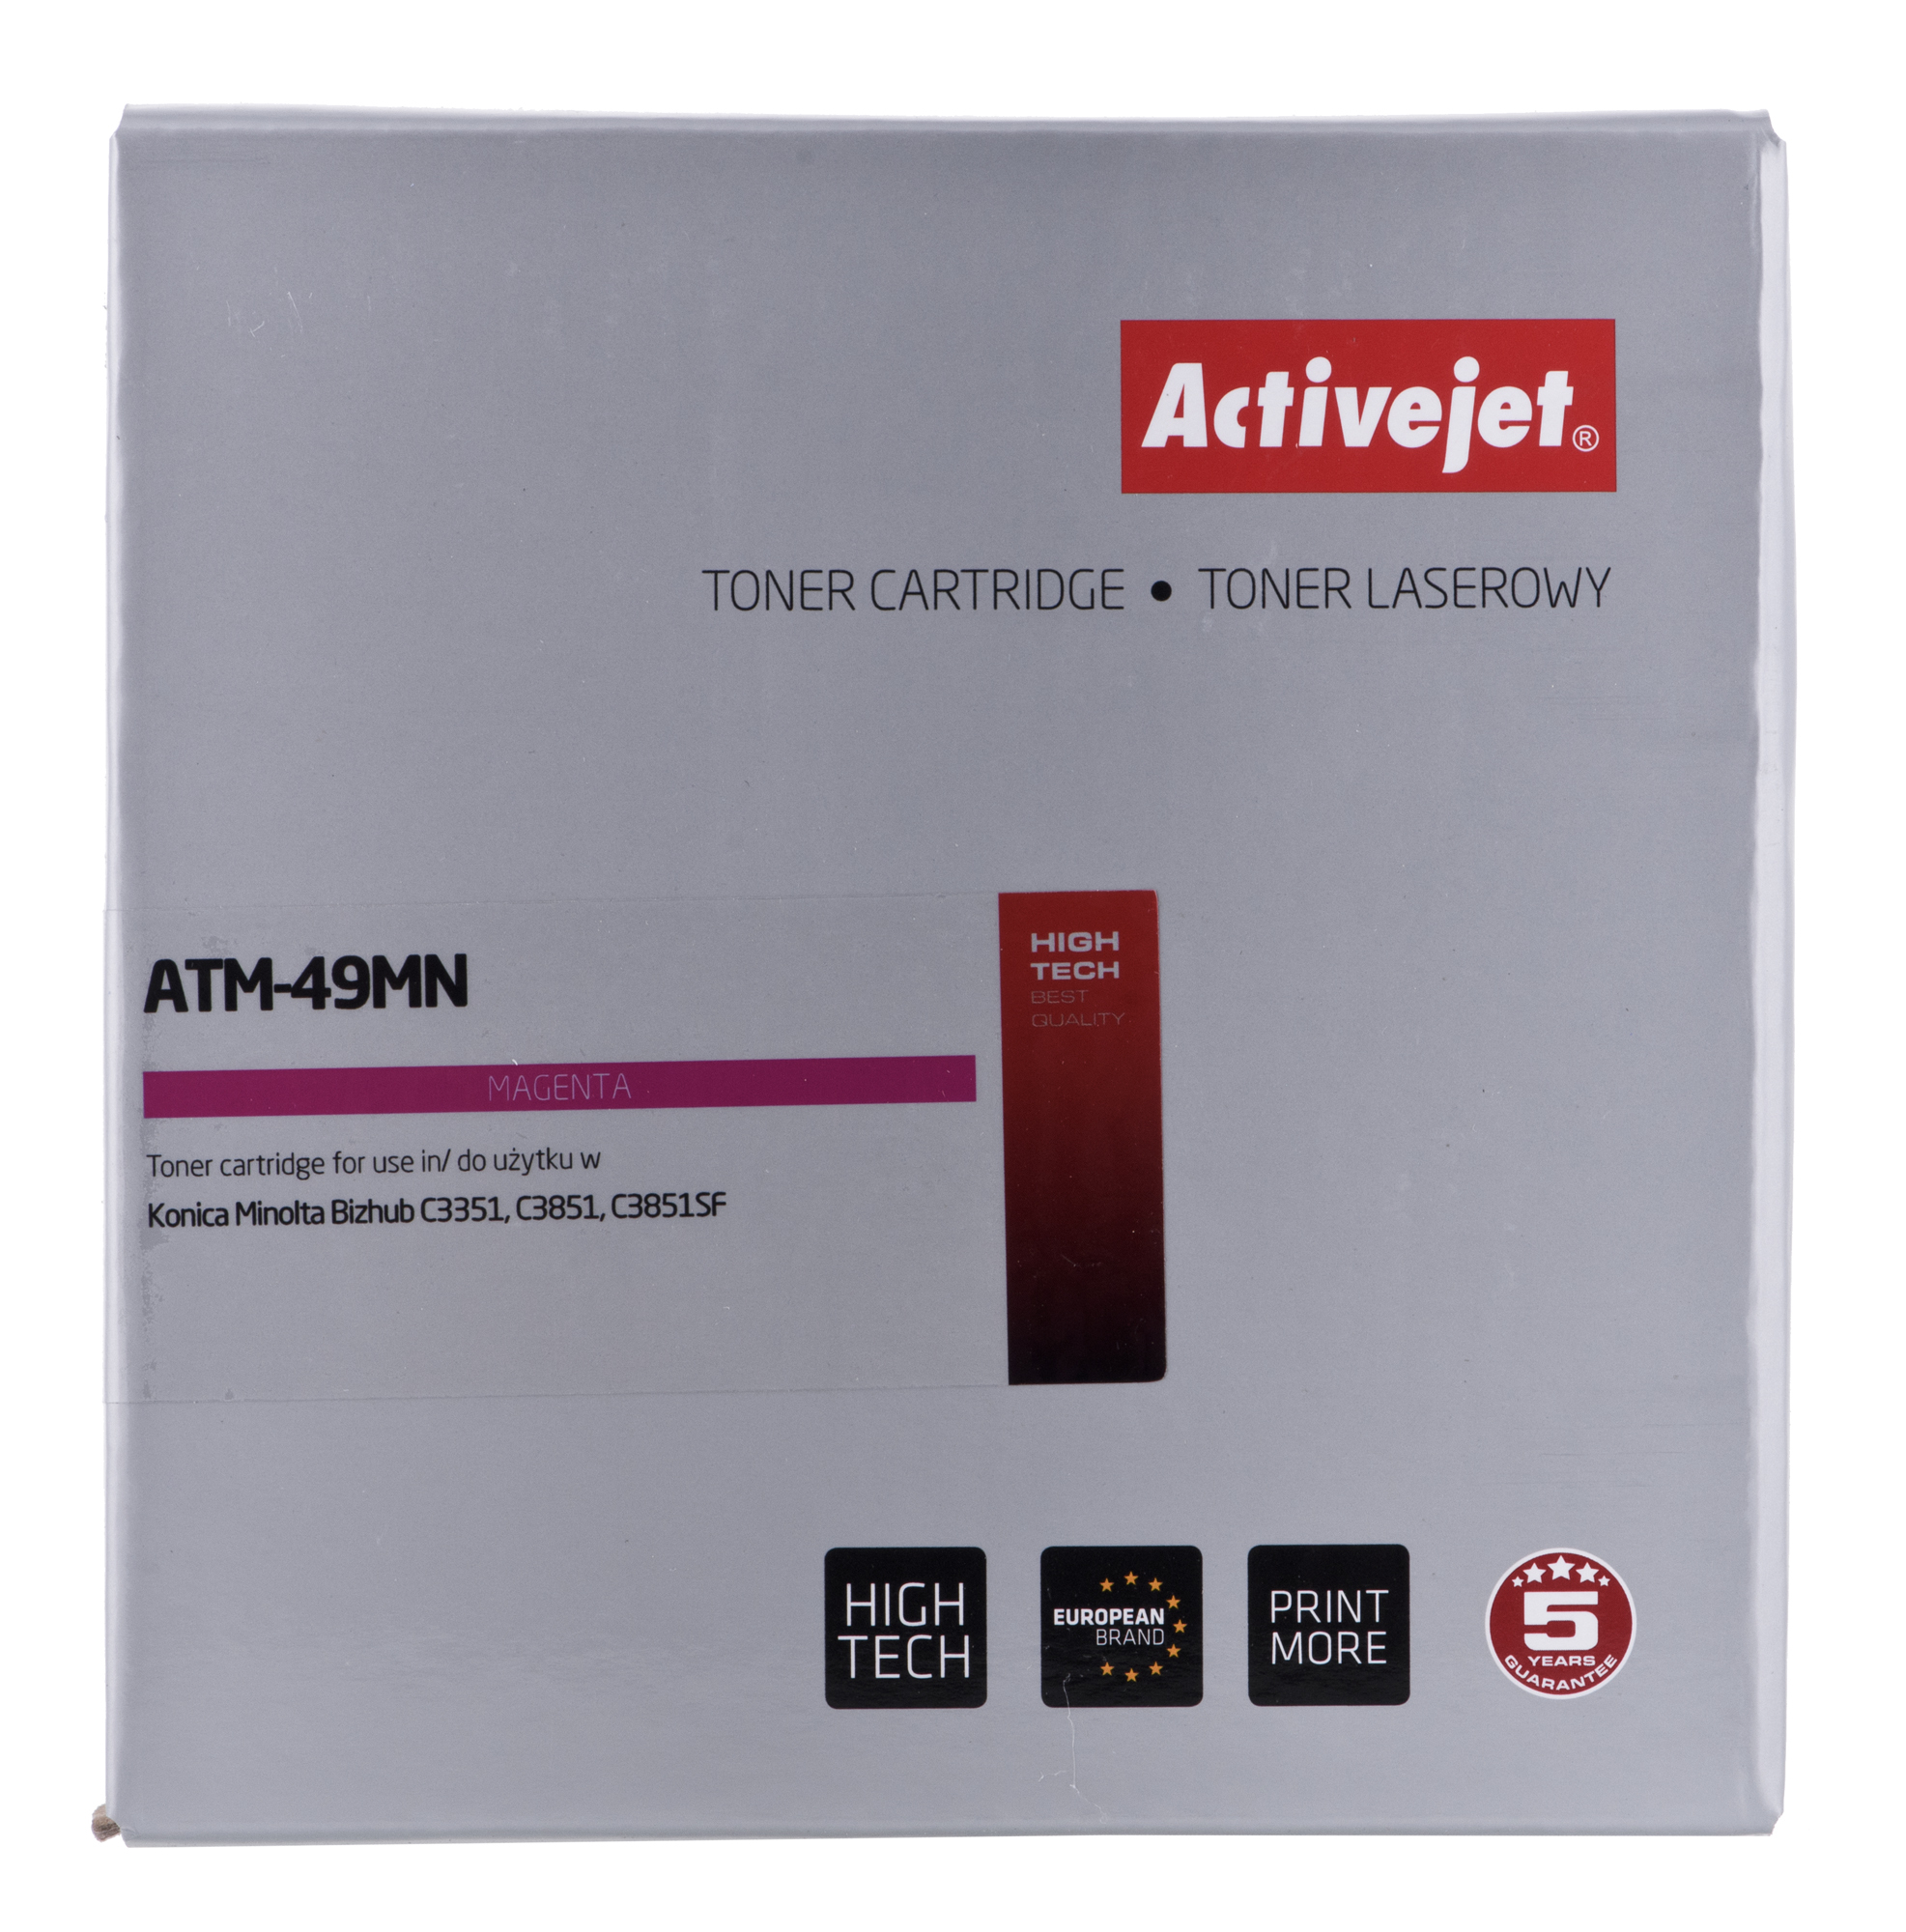 Toner Activejet ATM-49MN do drukarki Konica Minolta, zamiennik Konica Minolta TNP49M; Supreme; 12000 stron; purpurowy.